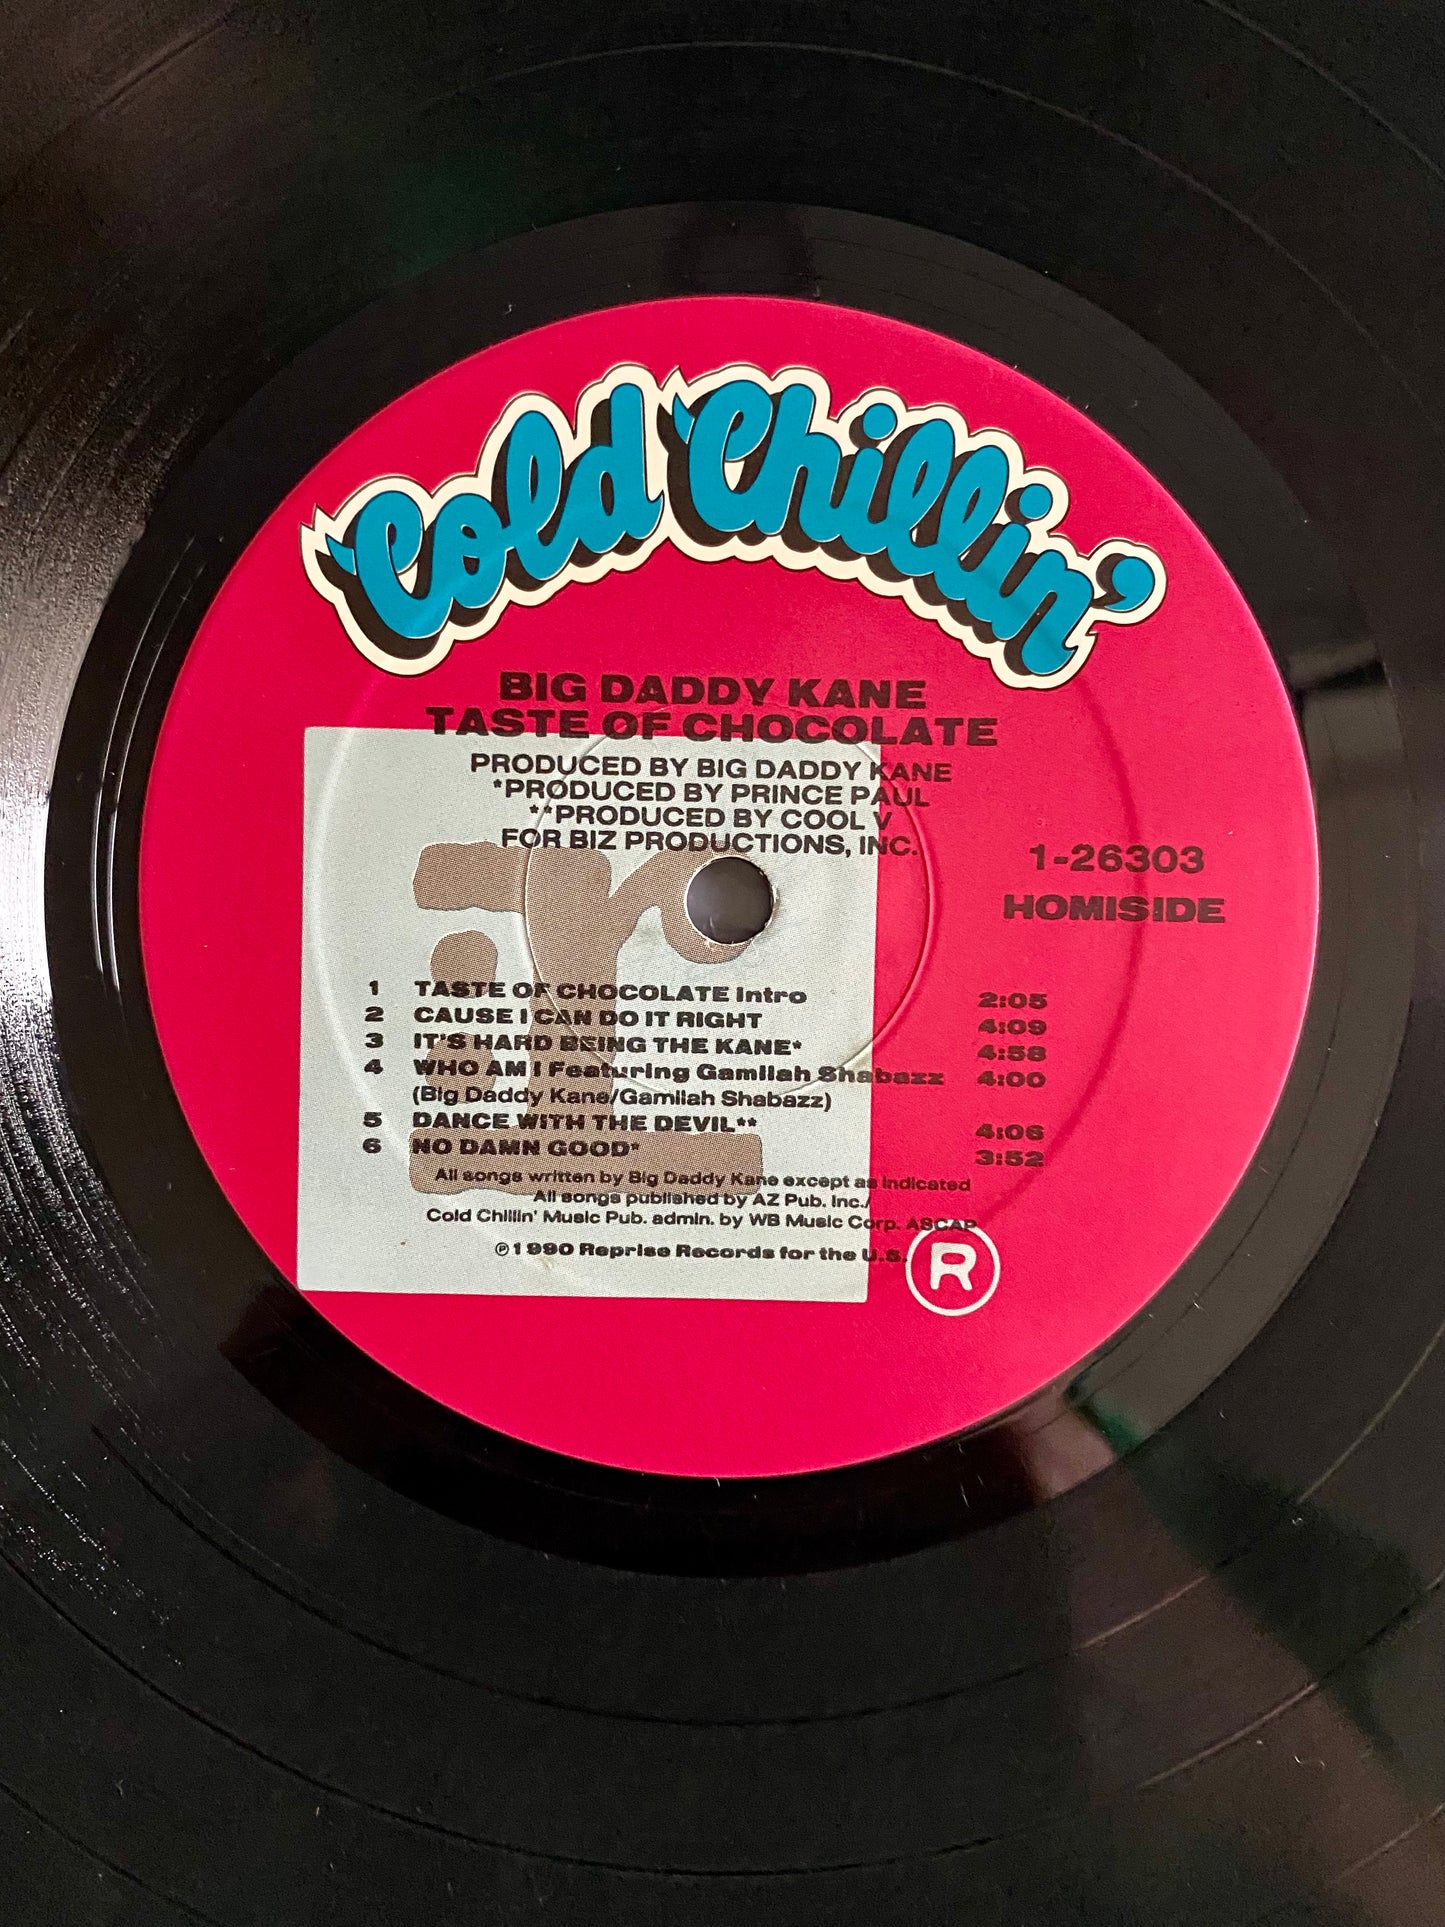 Big Daddy Kane - Taste Of Chocolate (LP, Album). HIP-HOP